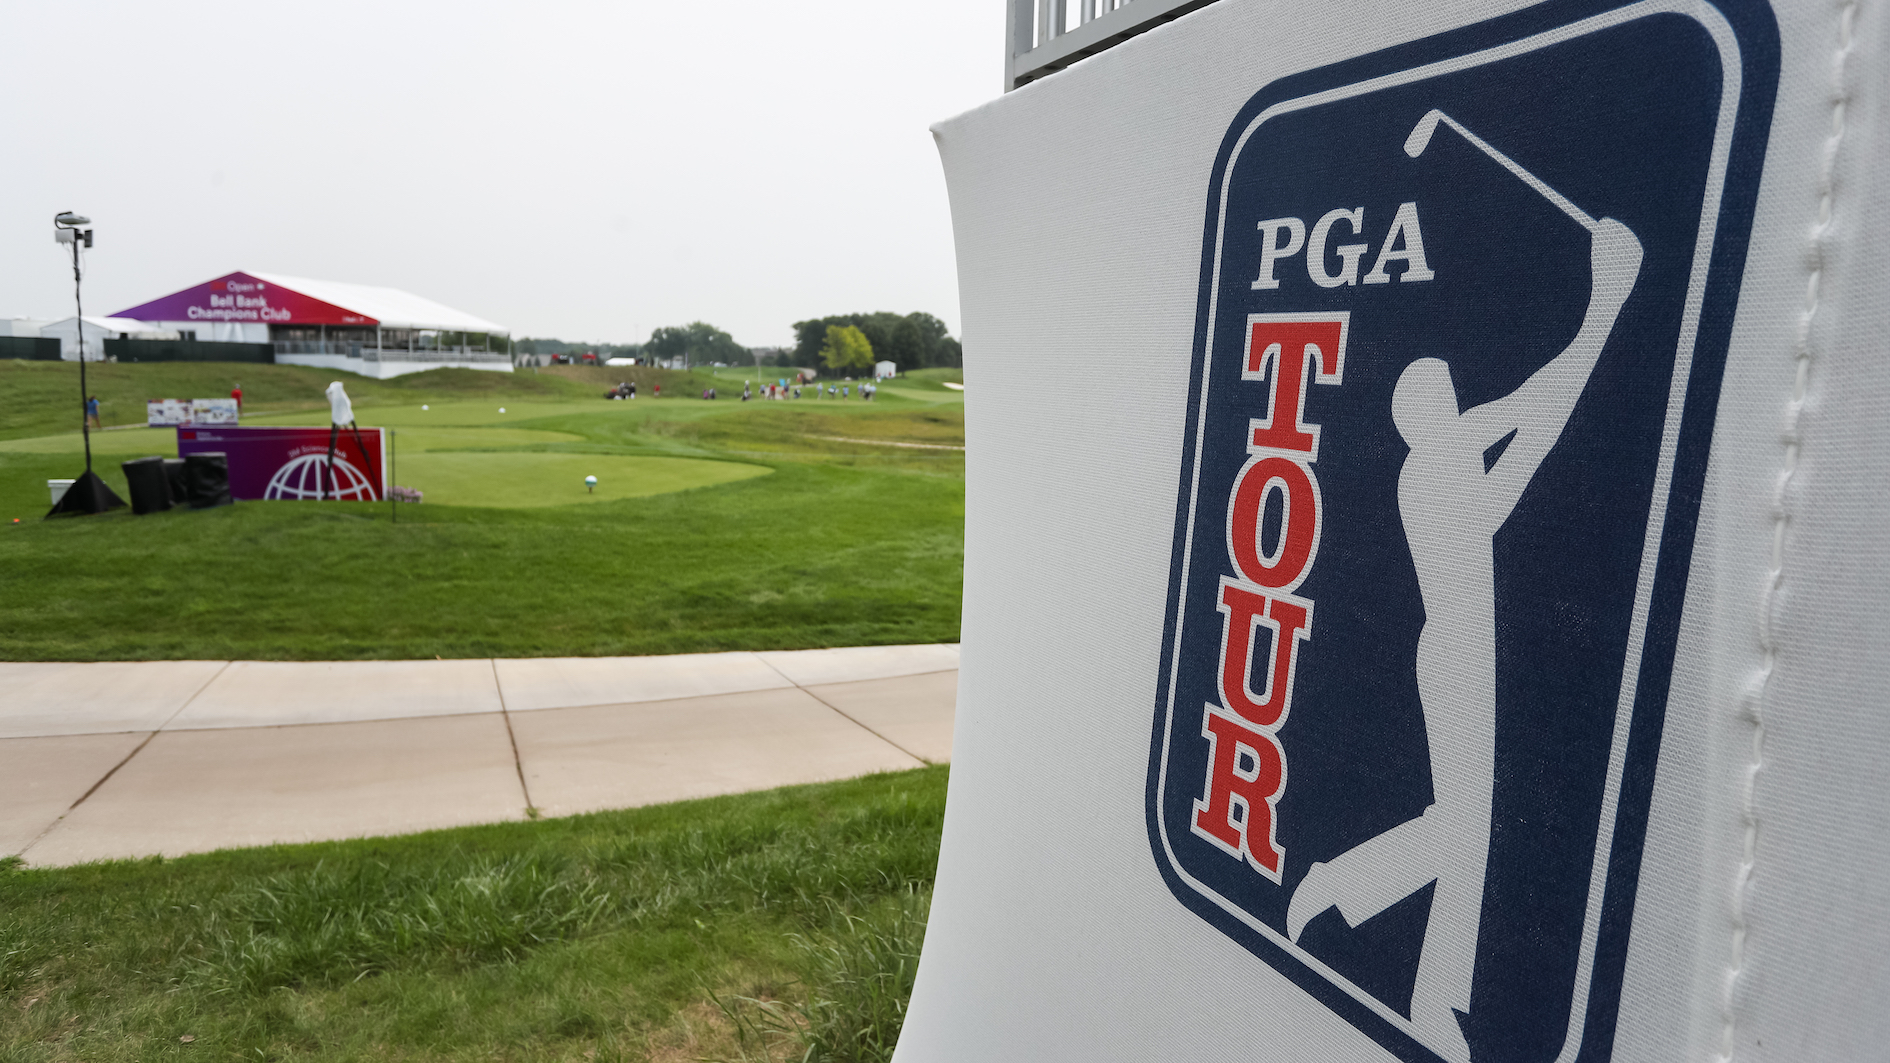 PGA Tour and European Tour announce details of historic strategic